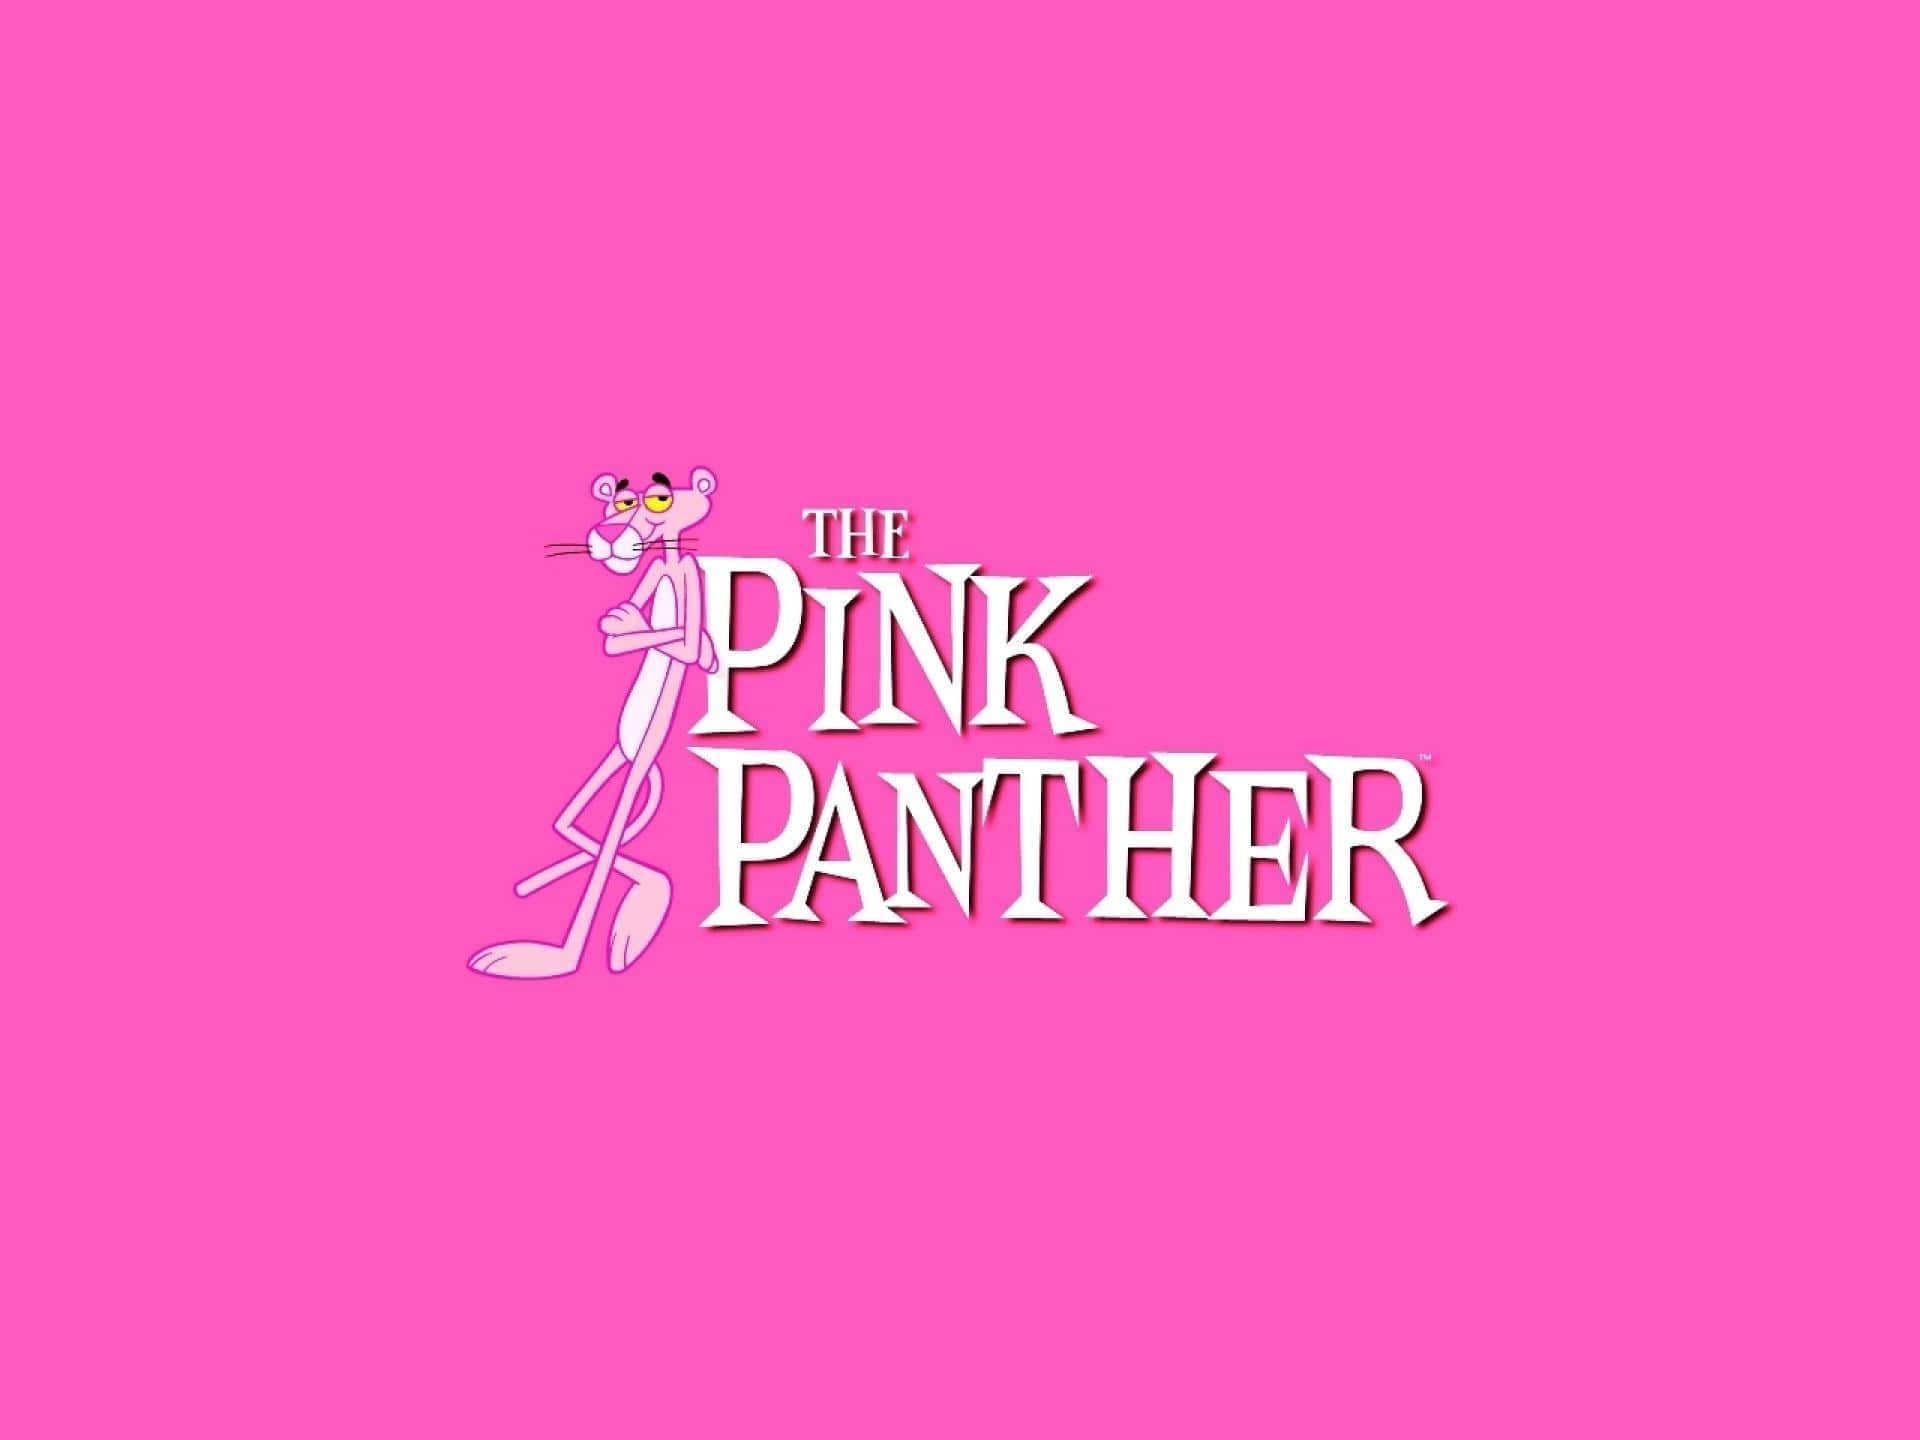 Pink Panther Character Logo Wallpaper